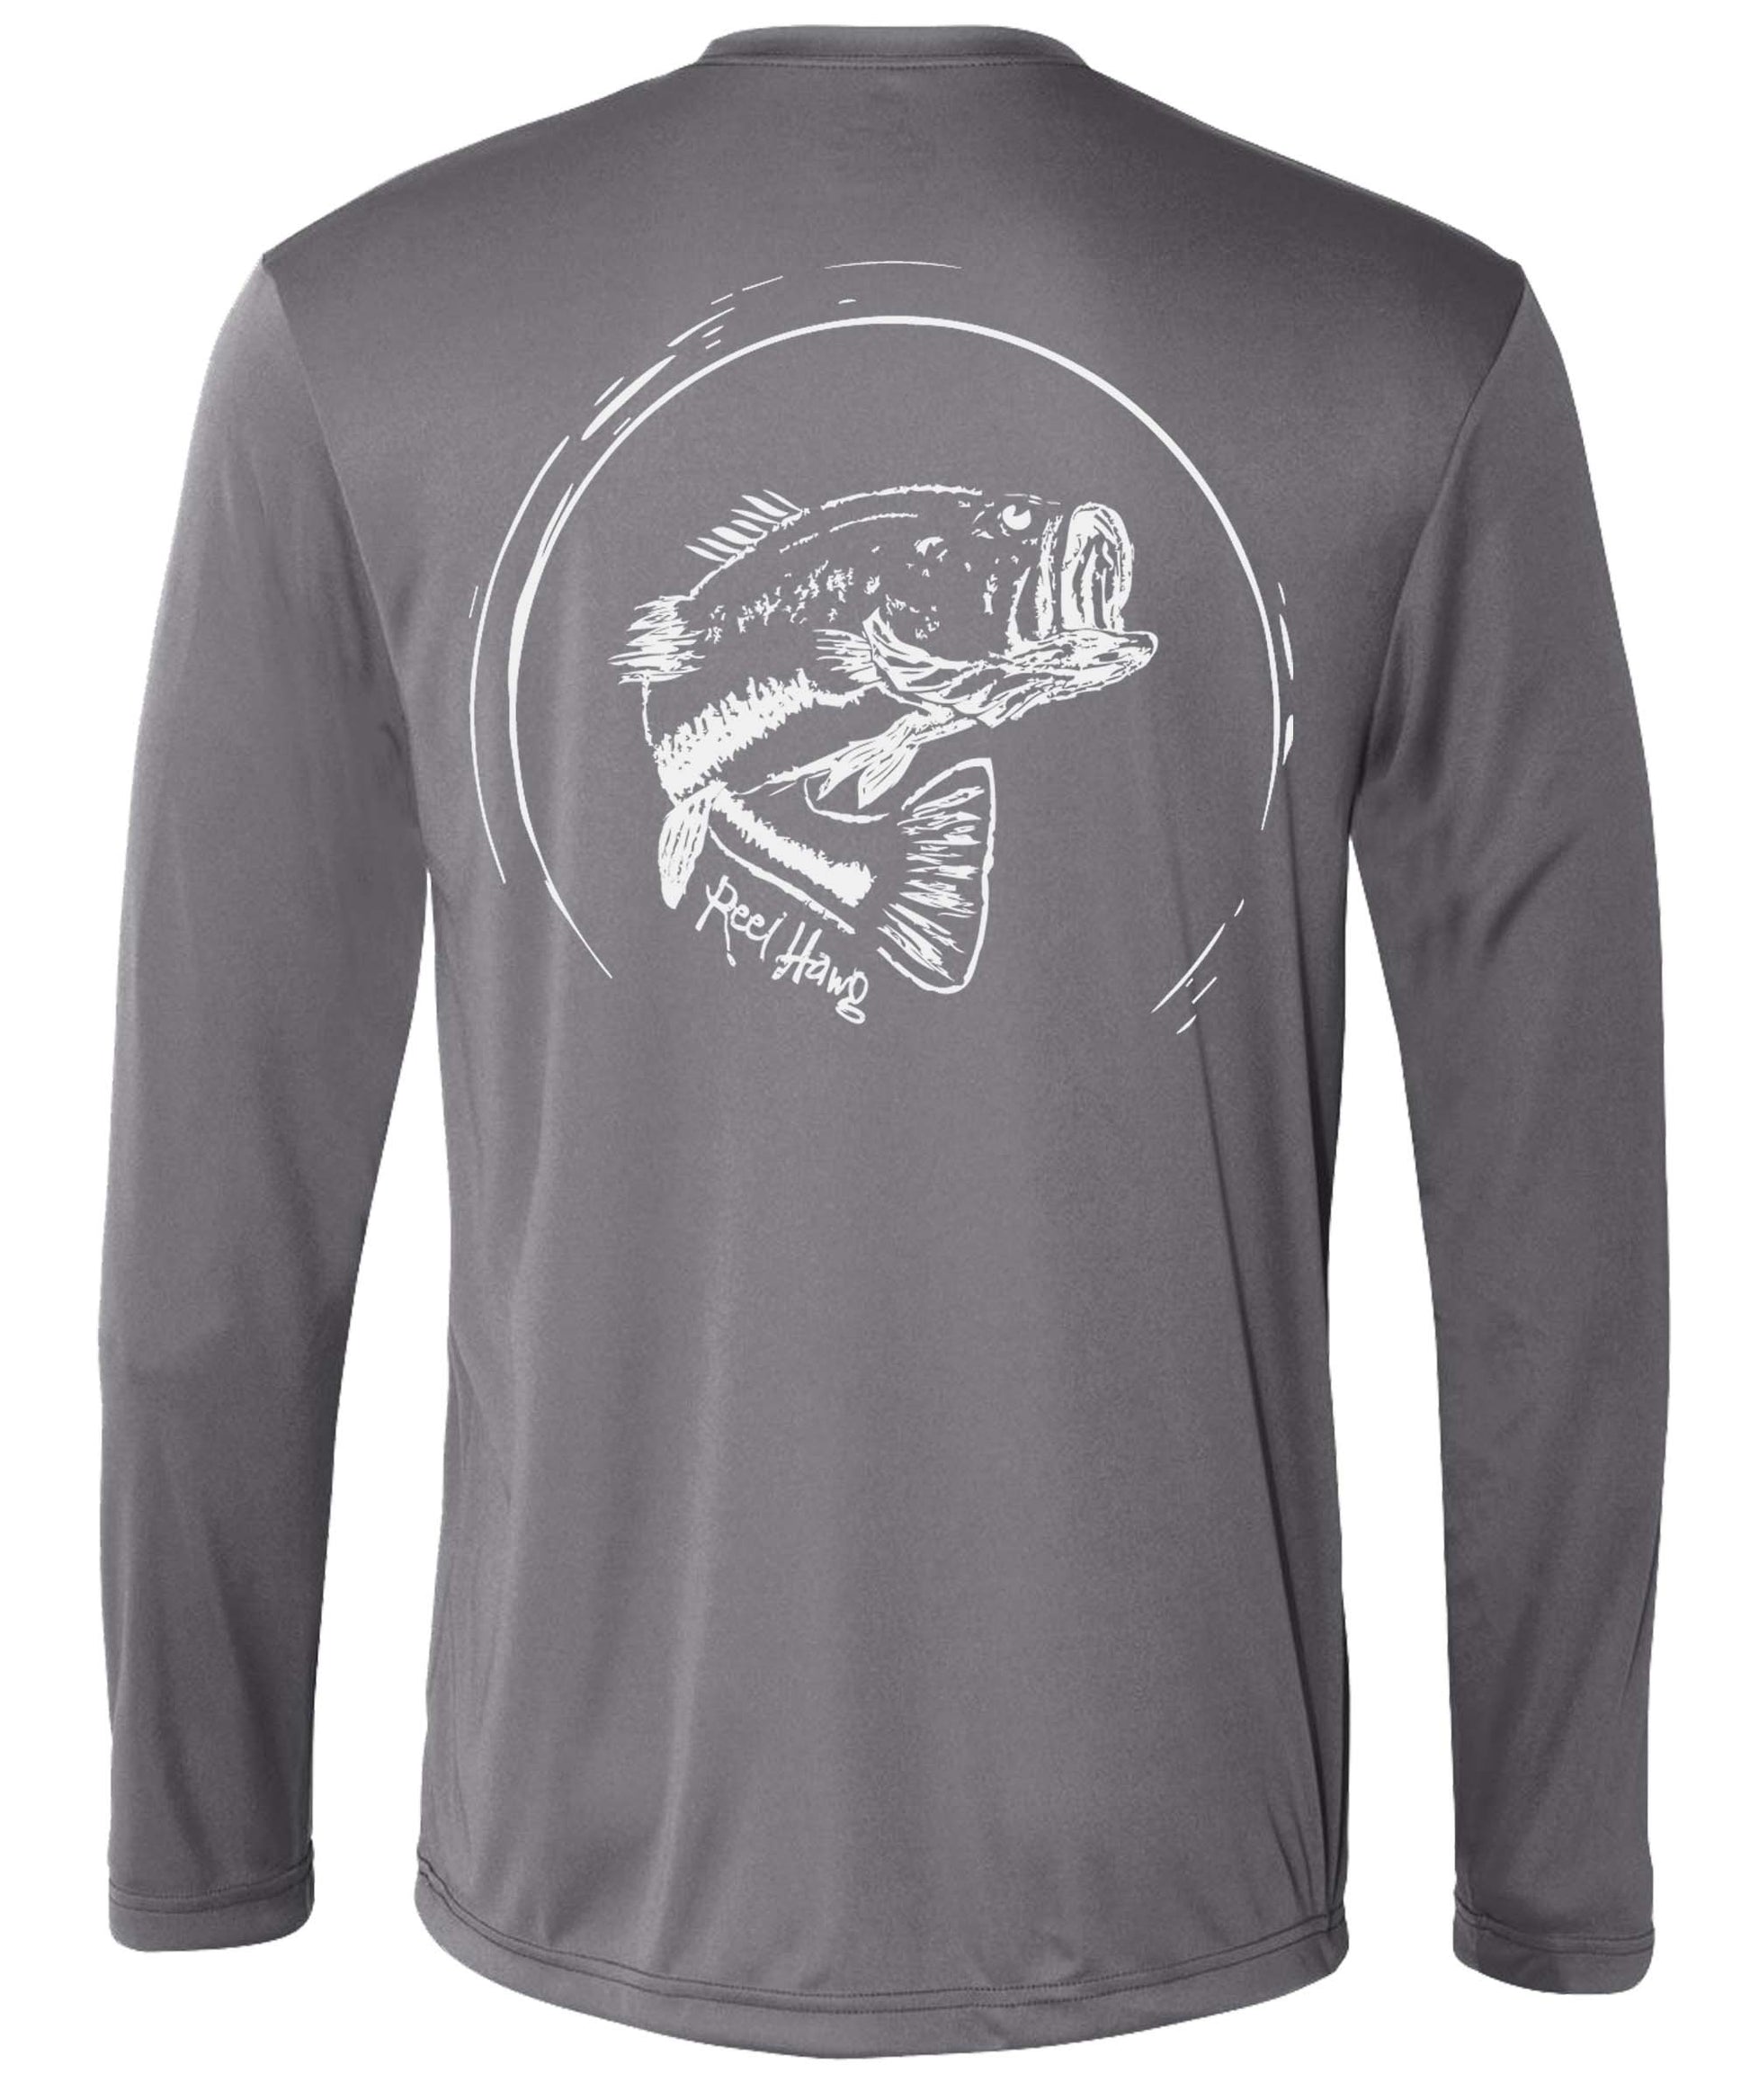 Bass Fishing Performance Dry-Fit 50+ UPF Sun Protection Shirts -Reel Fishy Apparel M / Lt. Gray Camo L/S - unisex